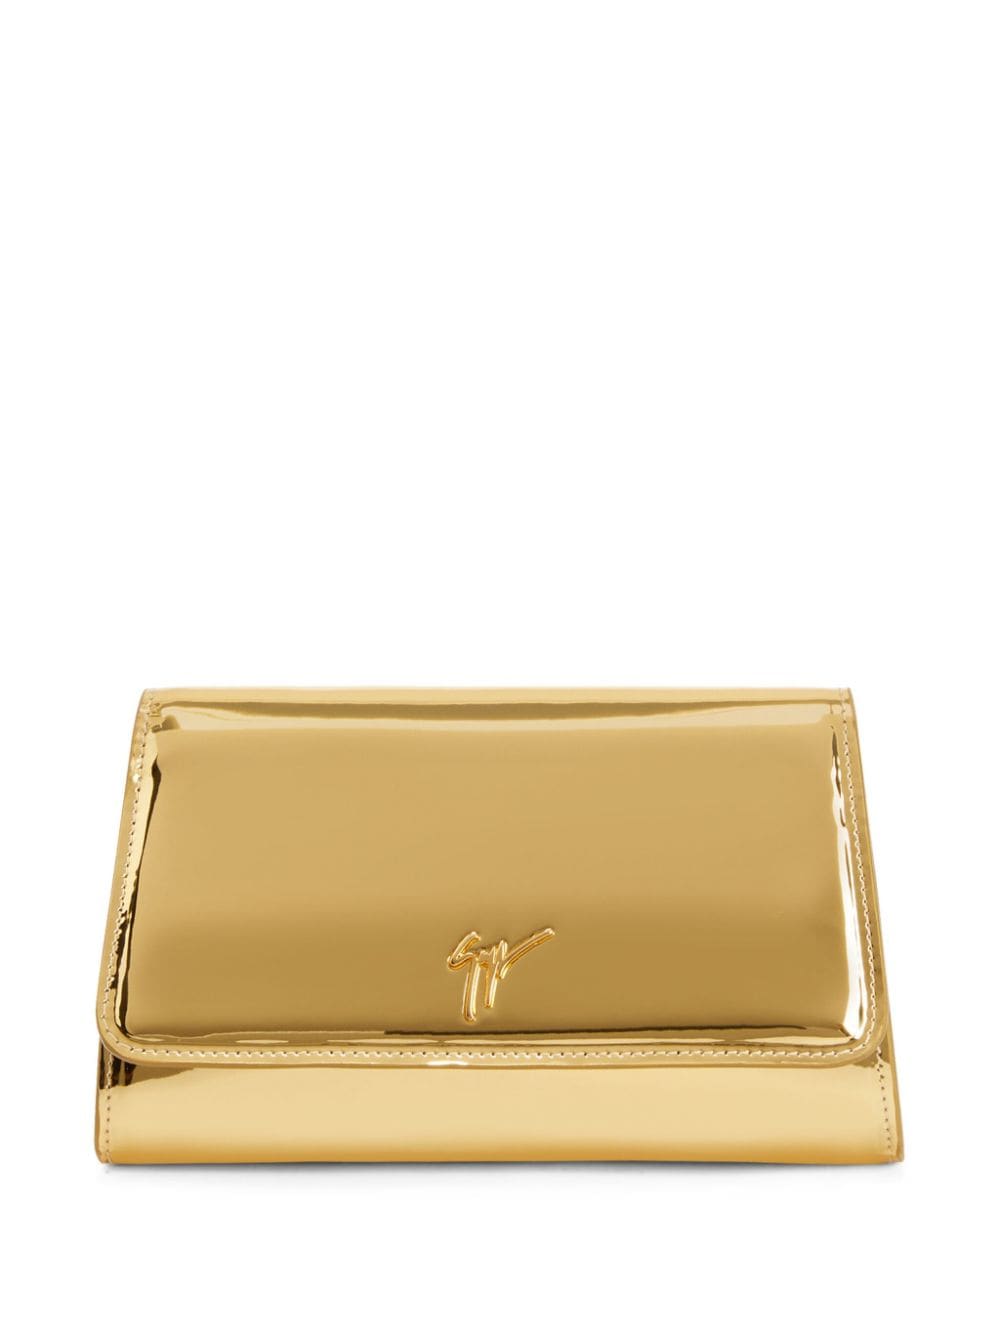 Giuseppe Zanotti Cleopatra metallic clutch bag - Gold von Giuseppe Zanotti